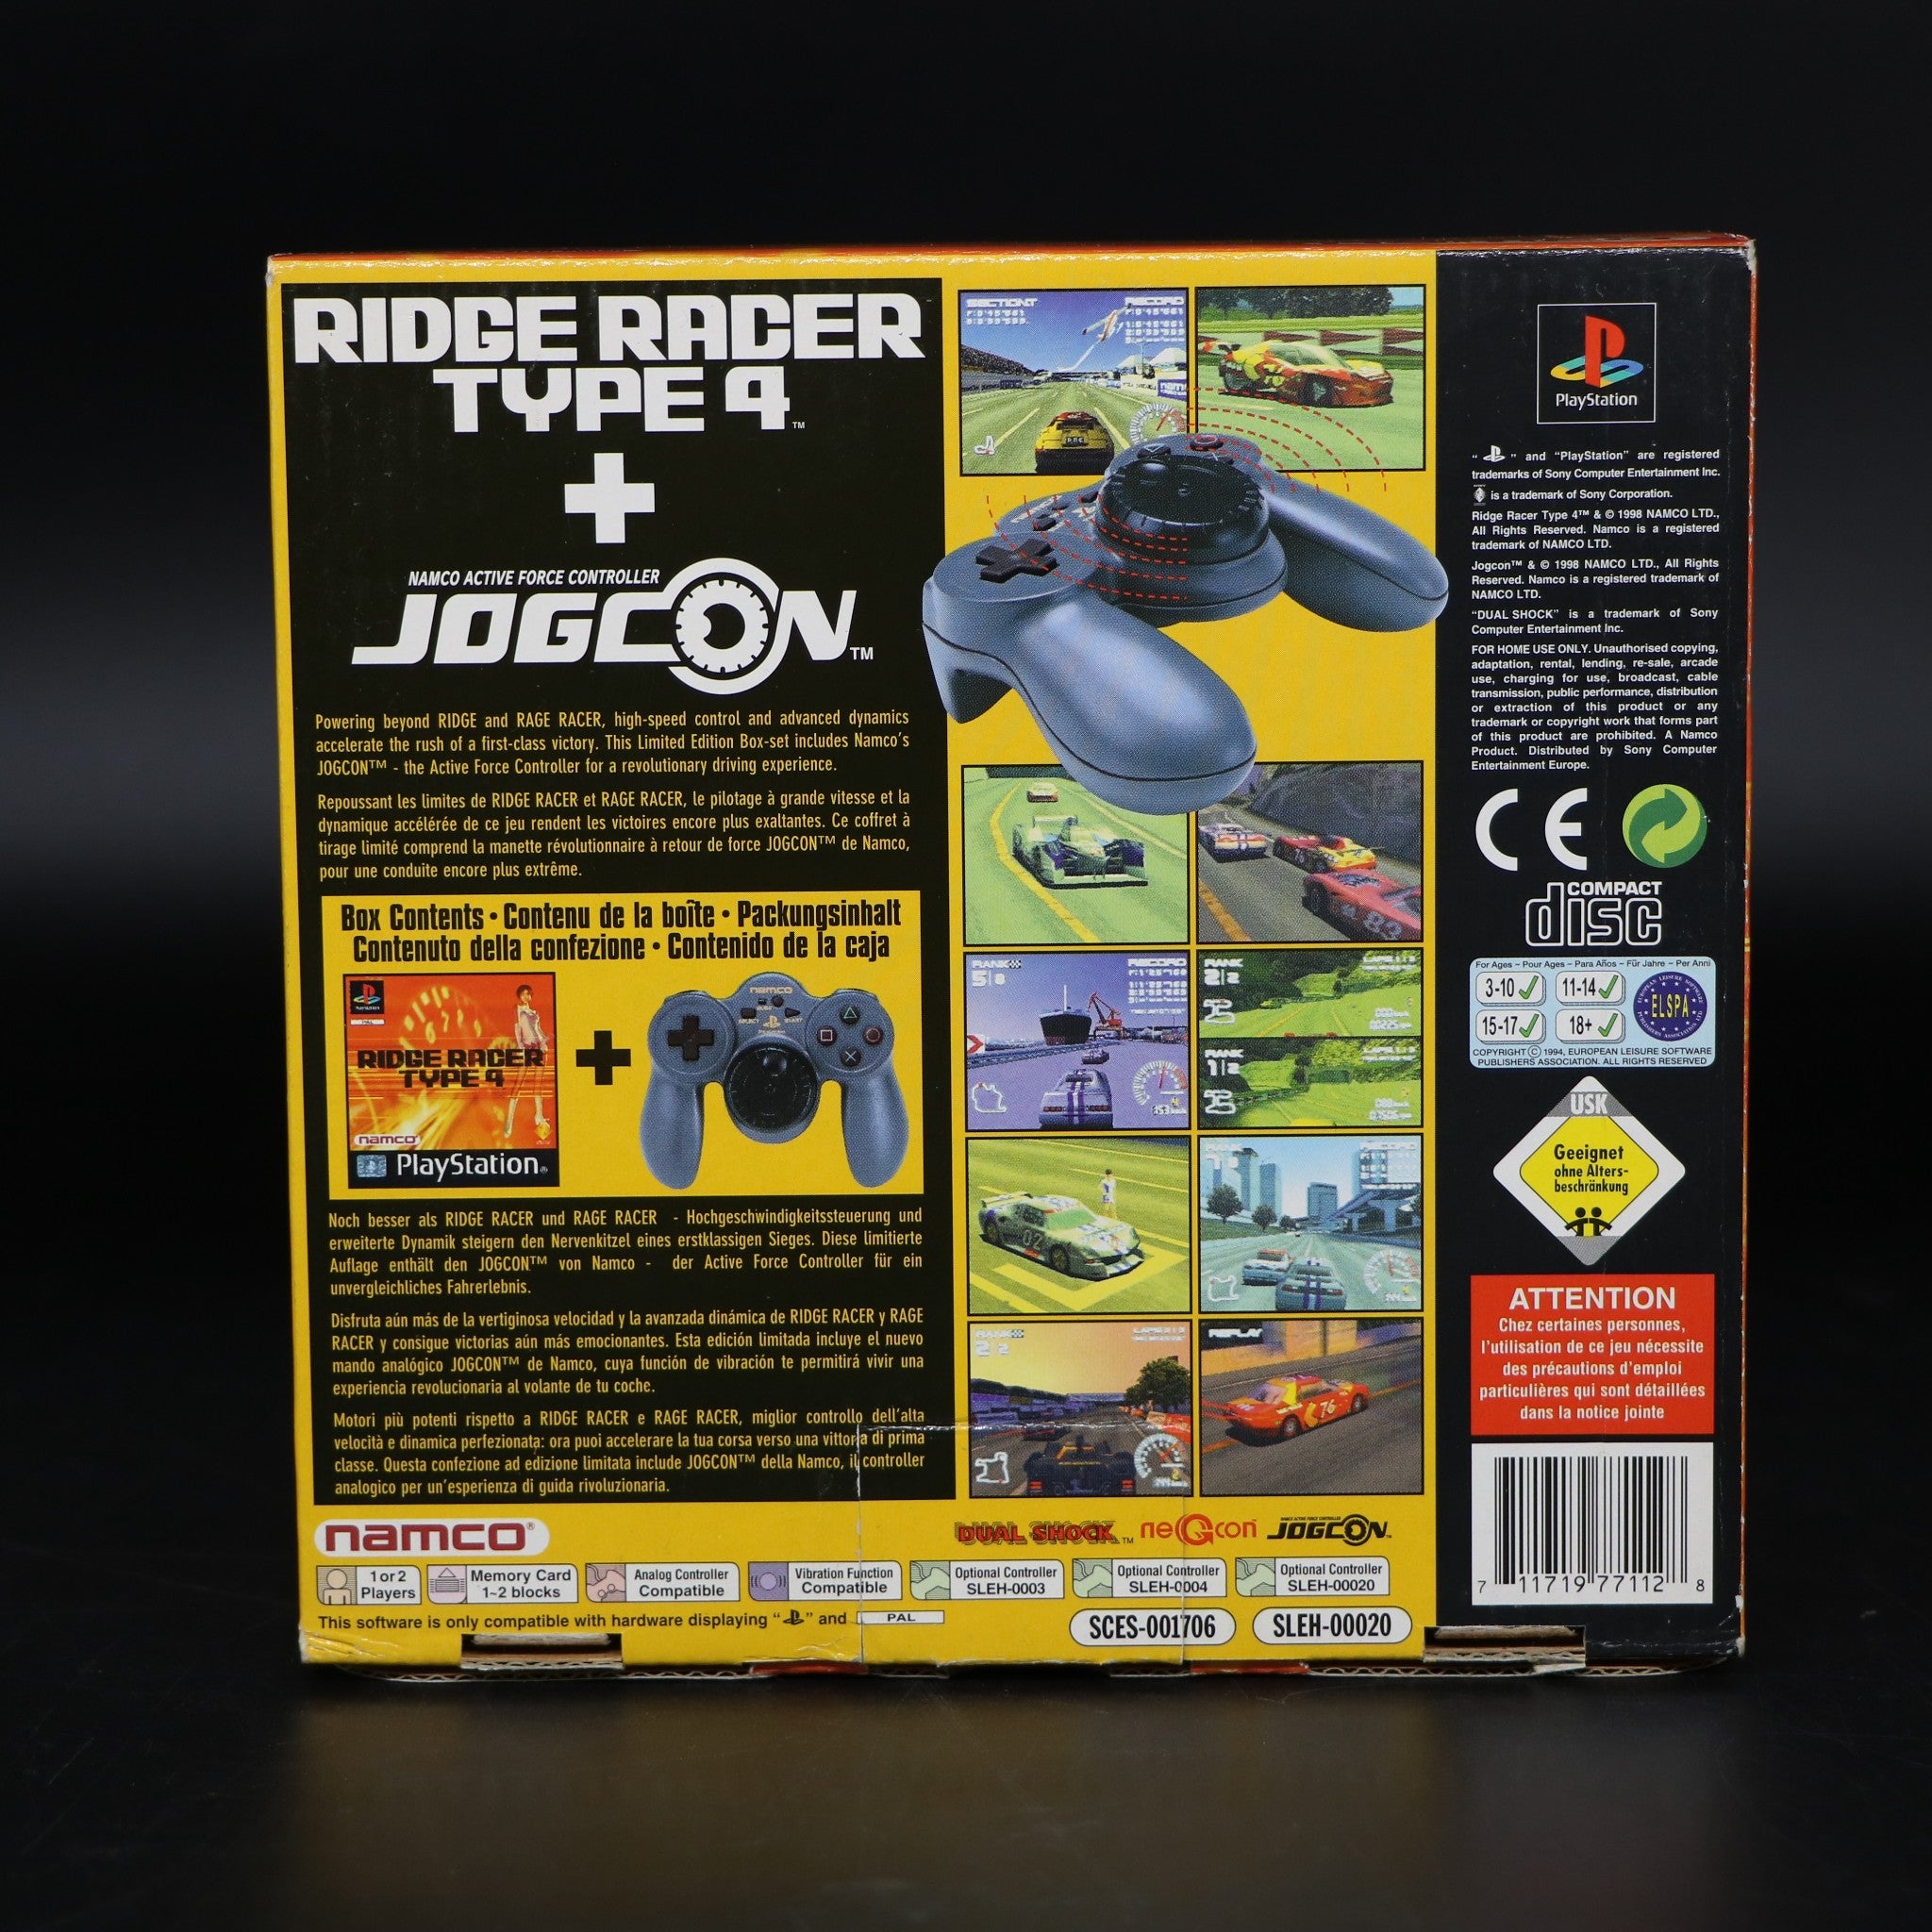 Ridge Racer Type 4 & JogCon Namco Controller | Sony Playstation PS1 Game Bundle